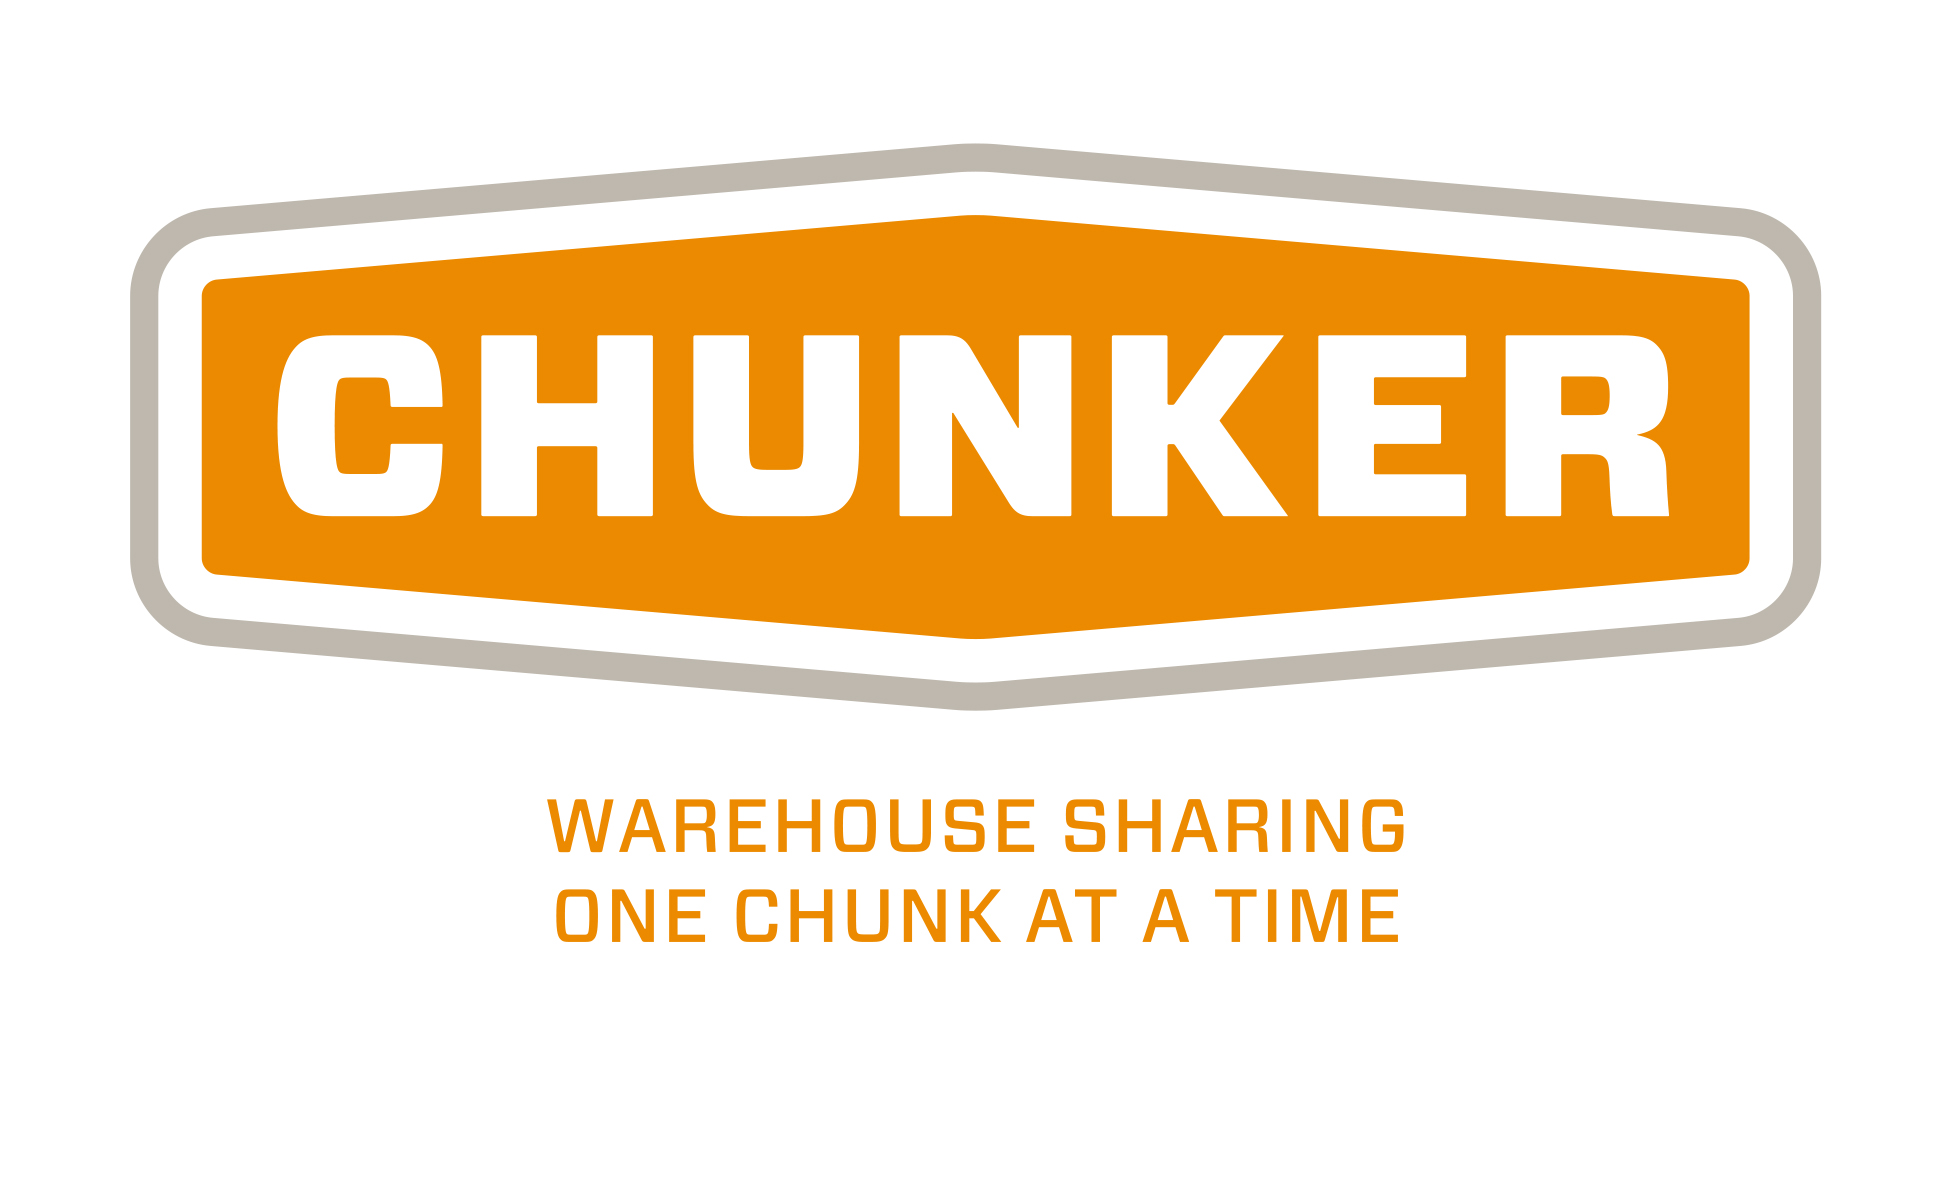 Chunker Wins 2020 Real Estate Technology Award